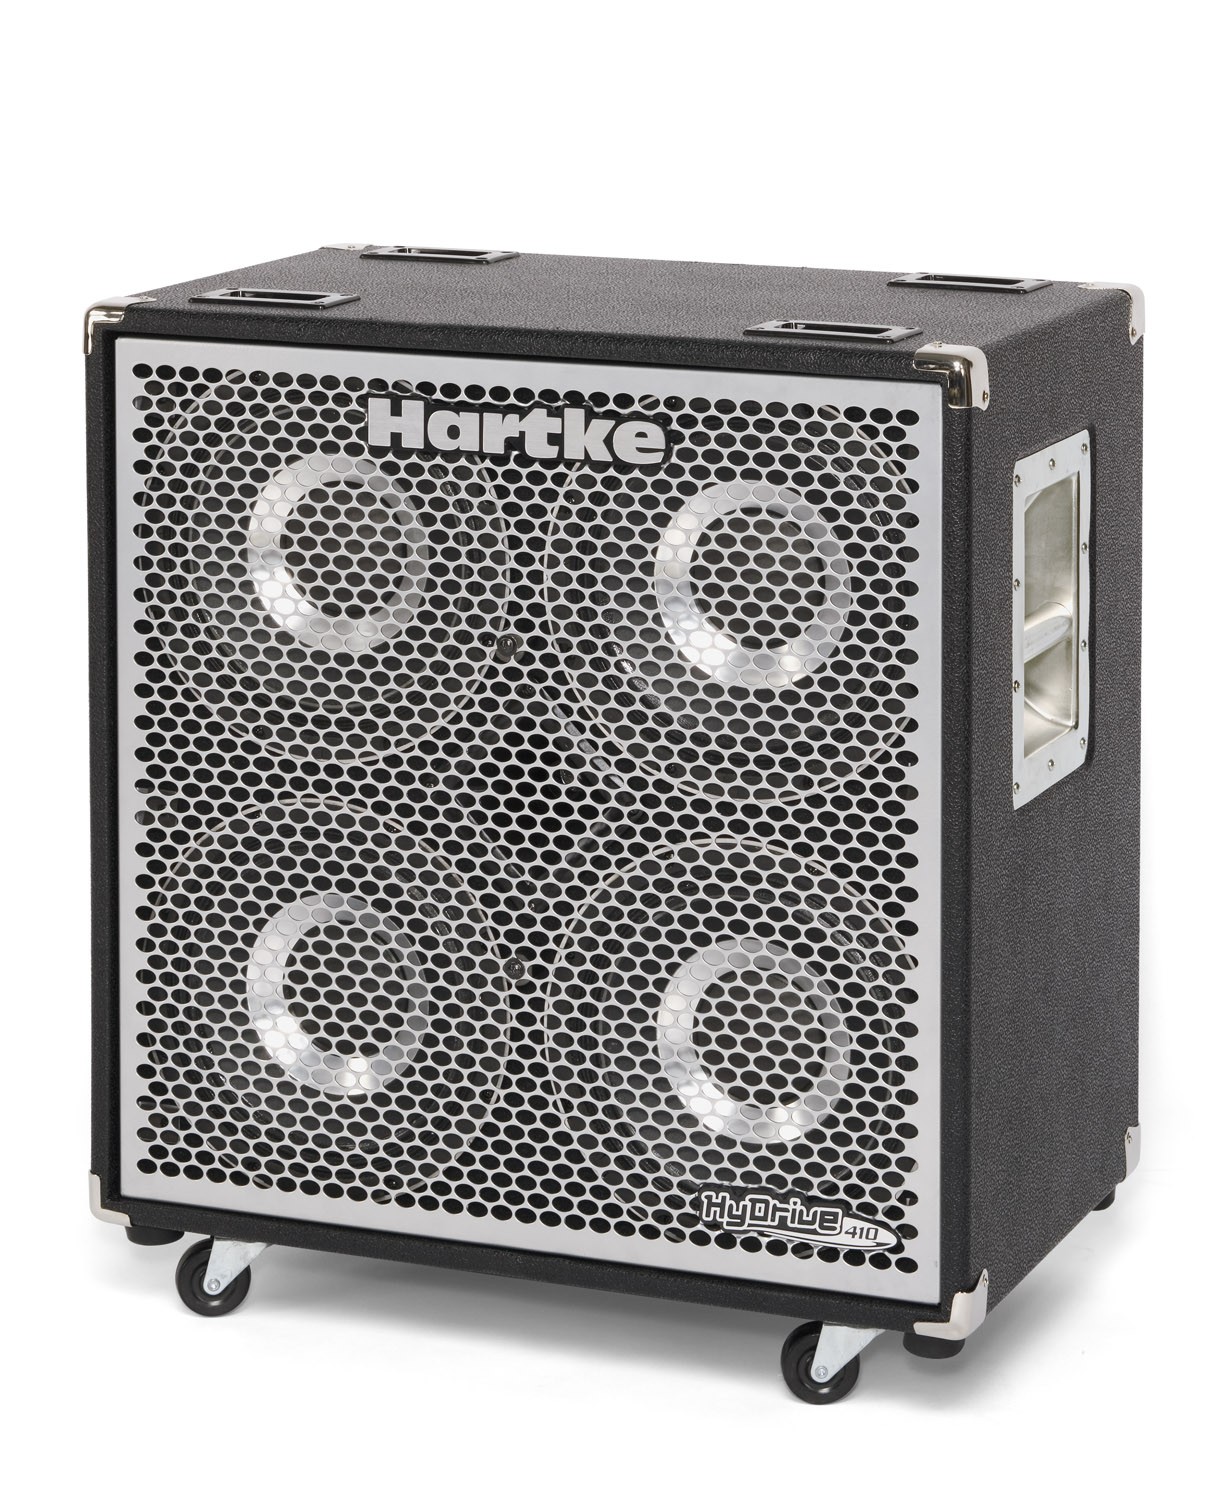 410 HYDRIVE акустическая басовая система 1000W/8 ом, 4x 10''HyDrive 250W, 30гц -17кгц